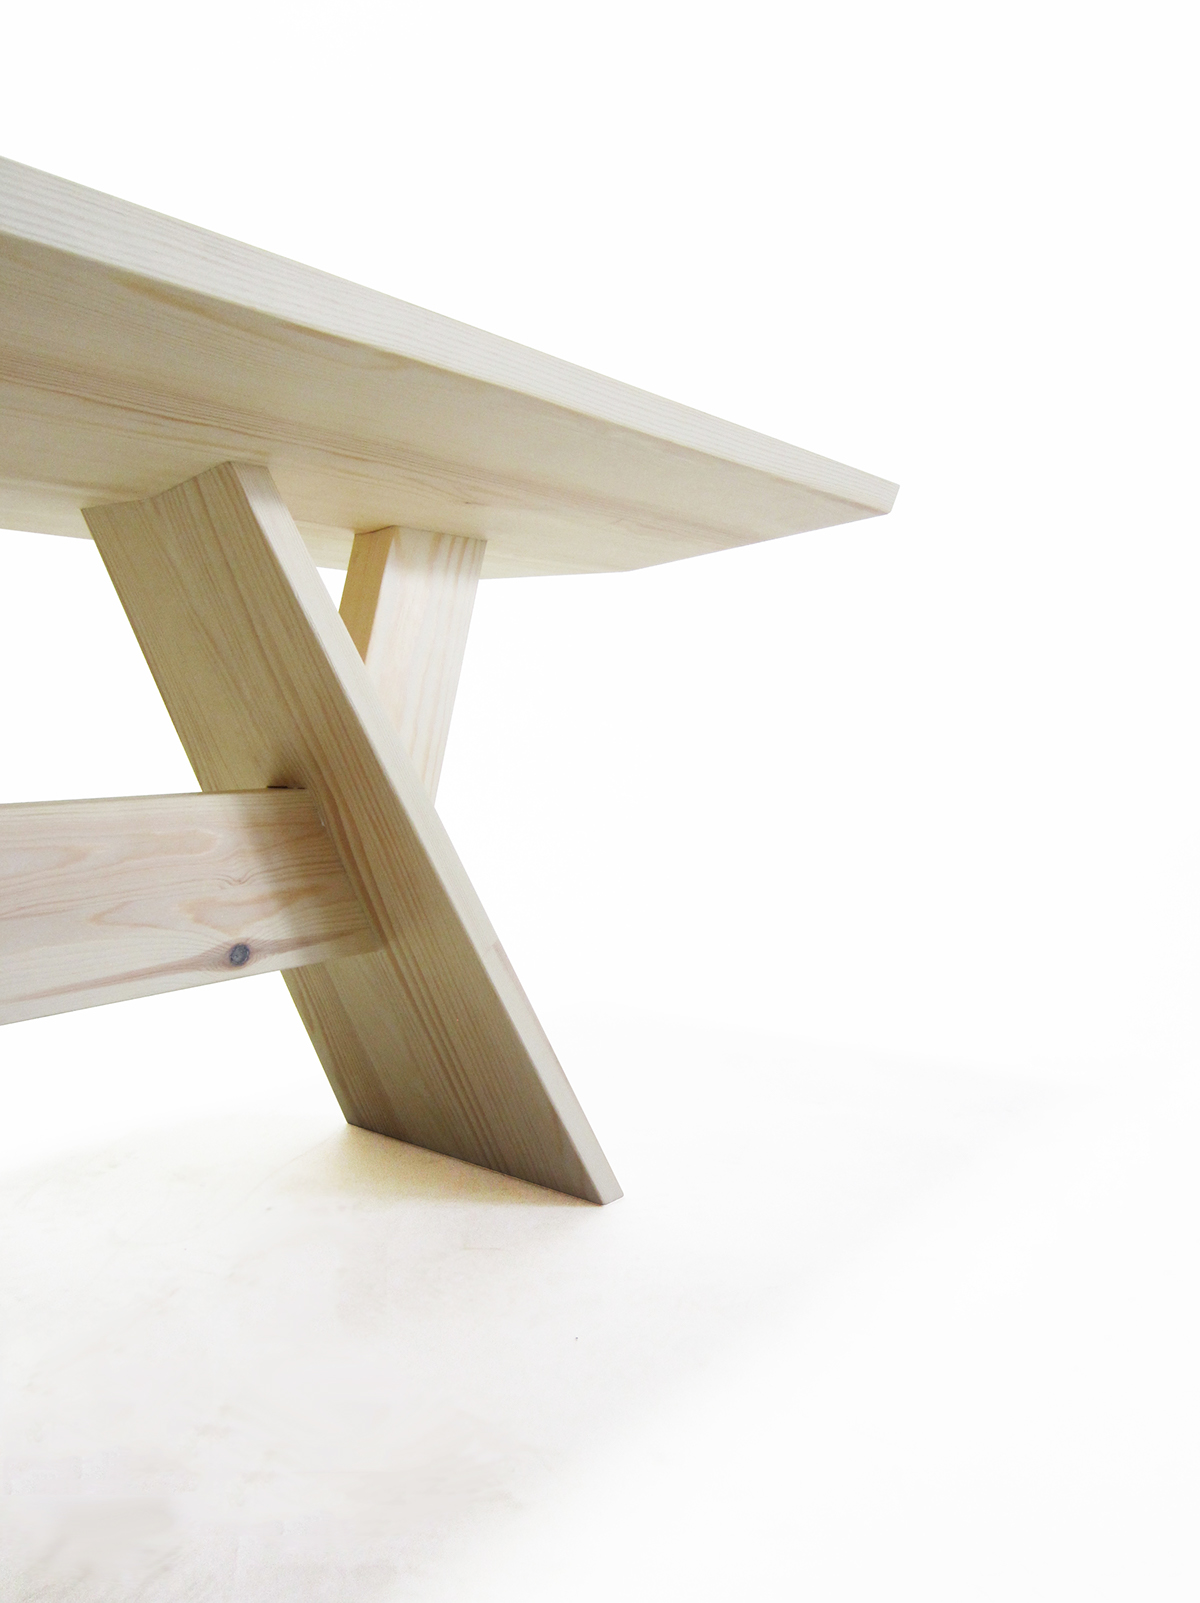 furniture cabinetmaking wood bench design pine